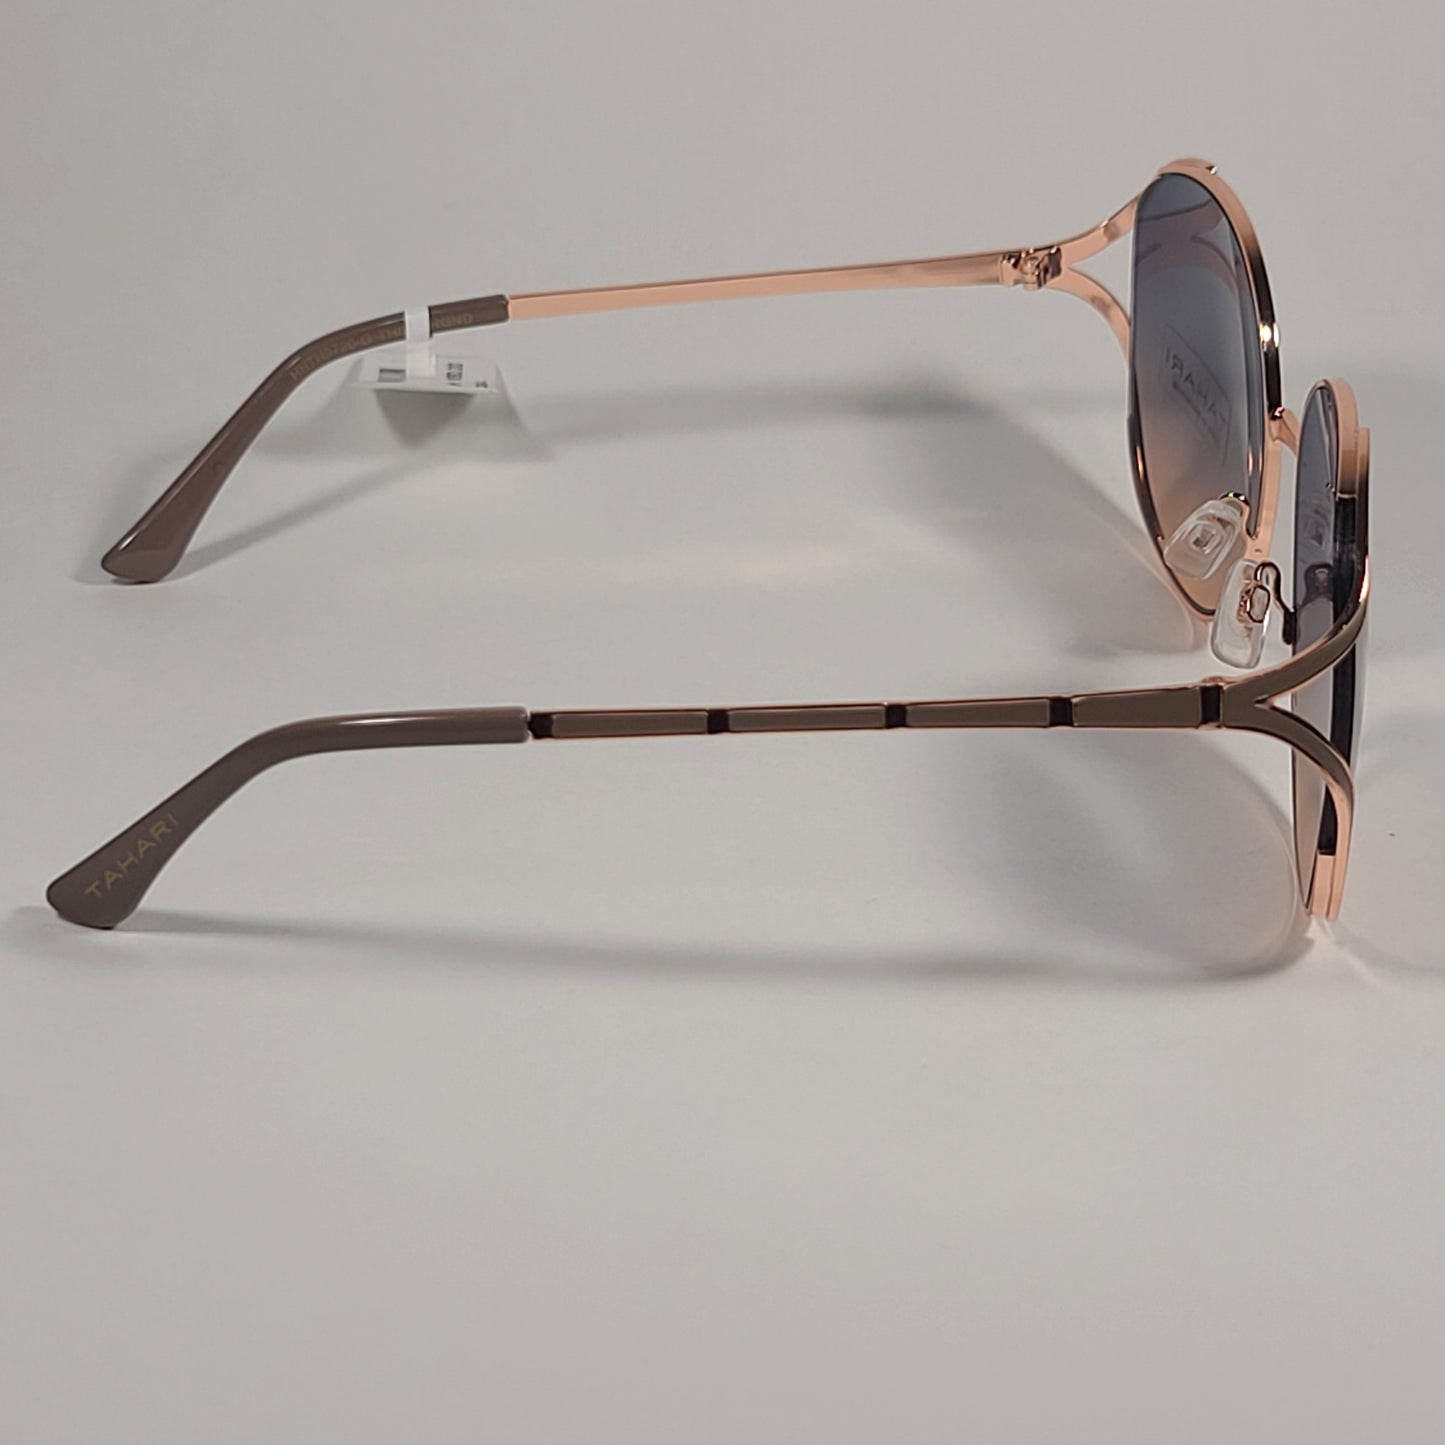 Tahari Oversized Sunglasses Nude Rose Gold Frame Rose Gradient Lens TH875 RGND - Sunglasses